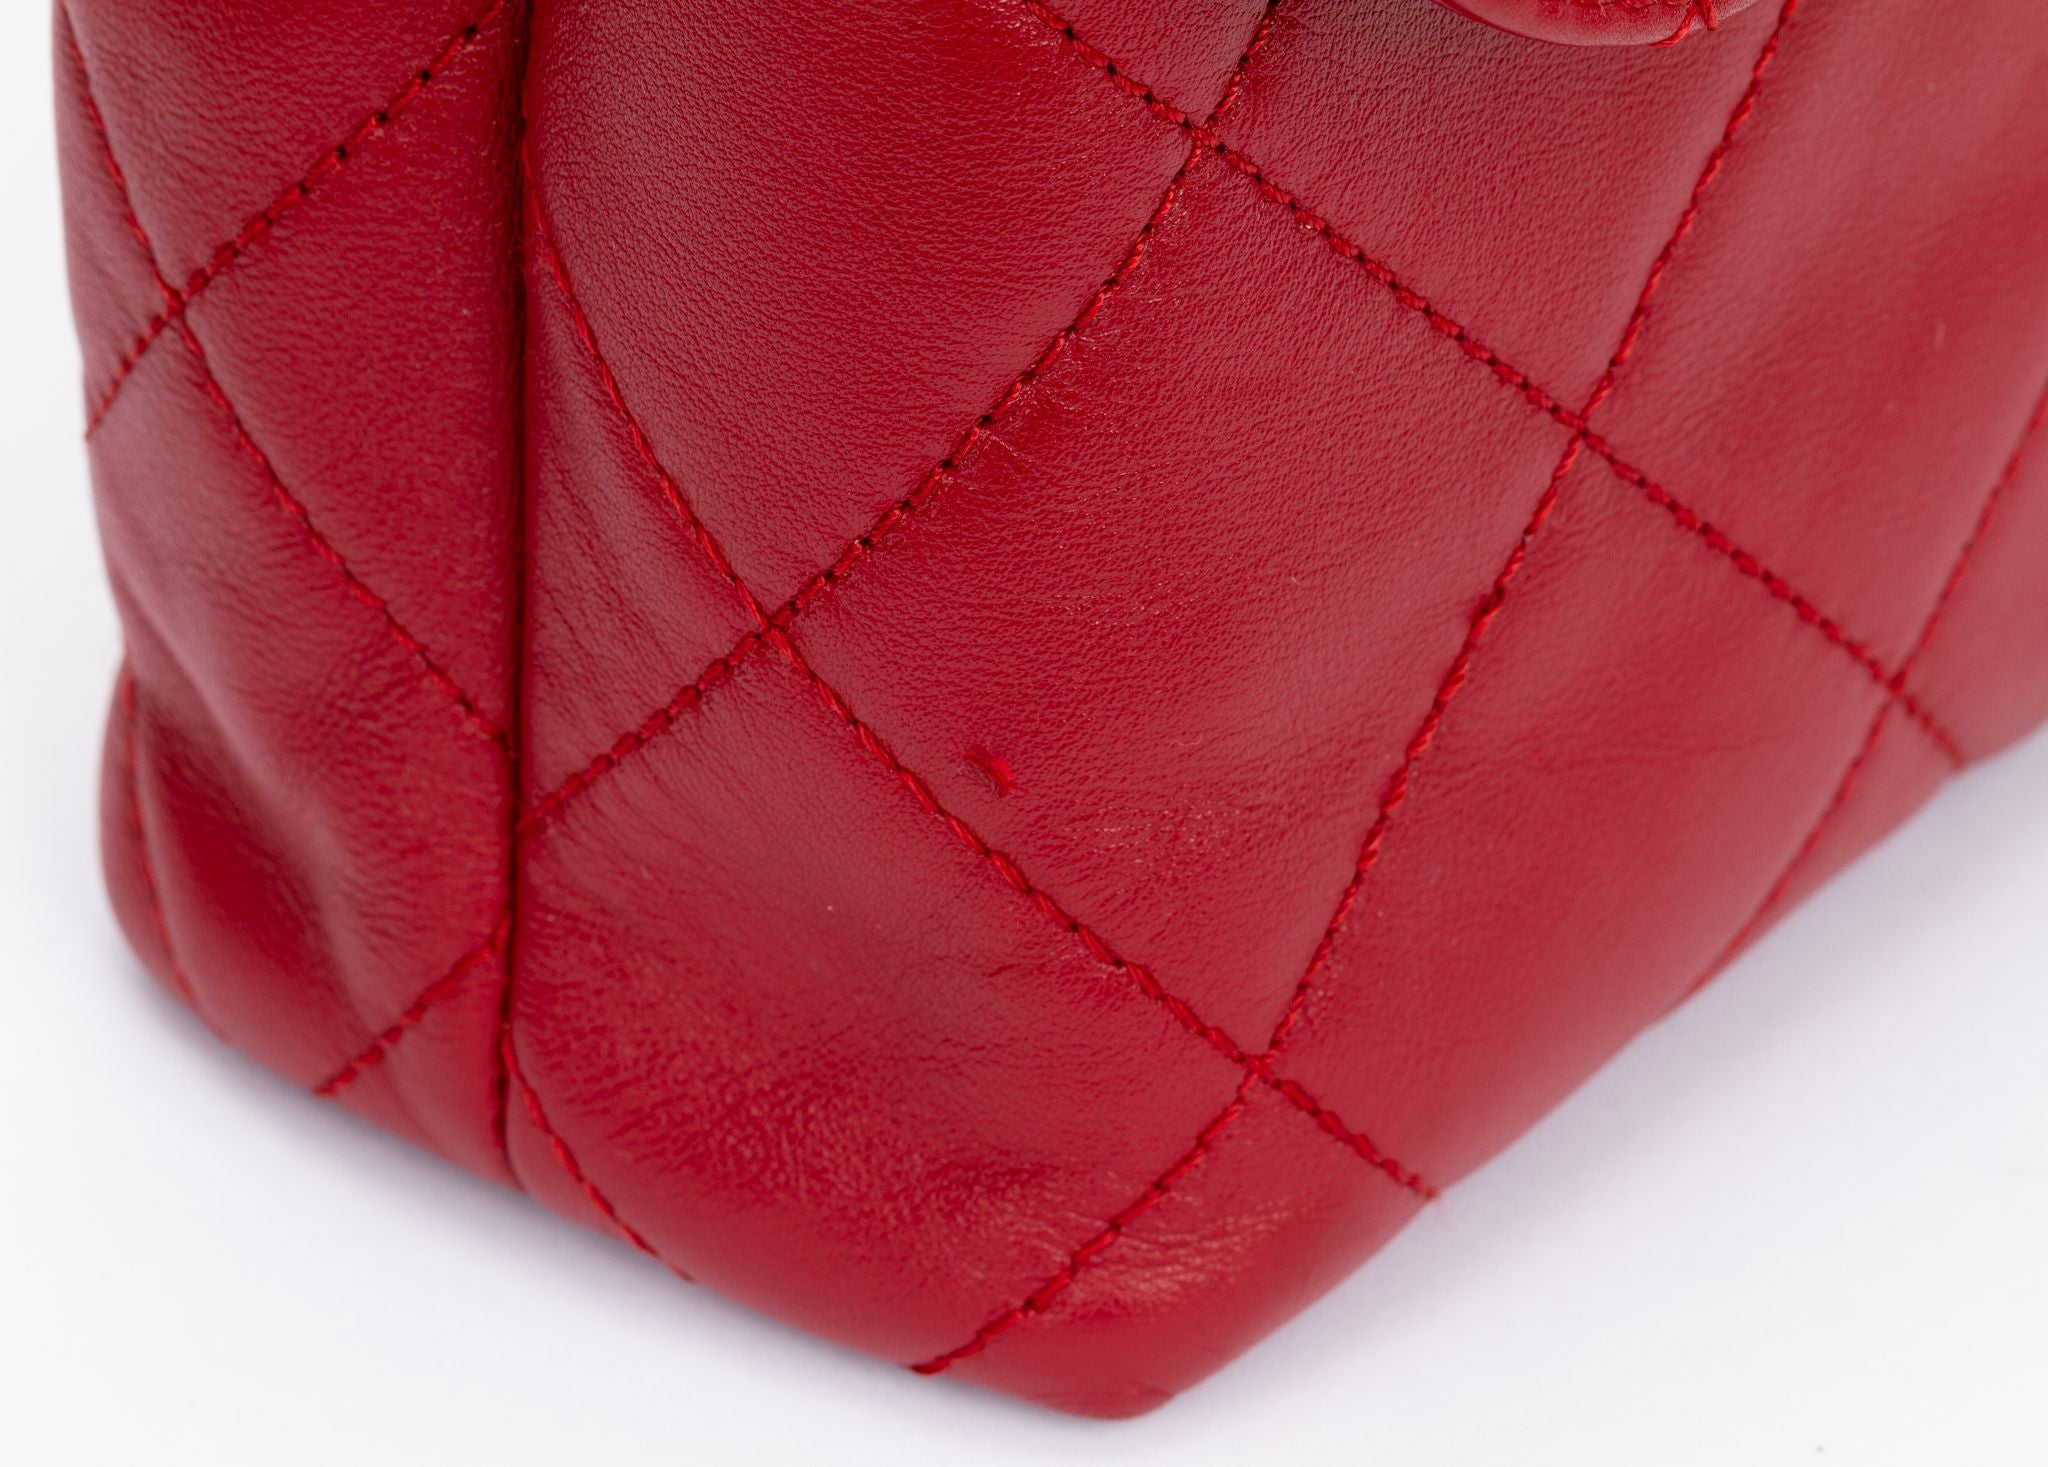 Chanel CHANEL Caviar Skin Drawstring Shoulder Bag Leather Red